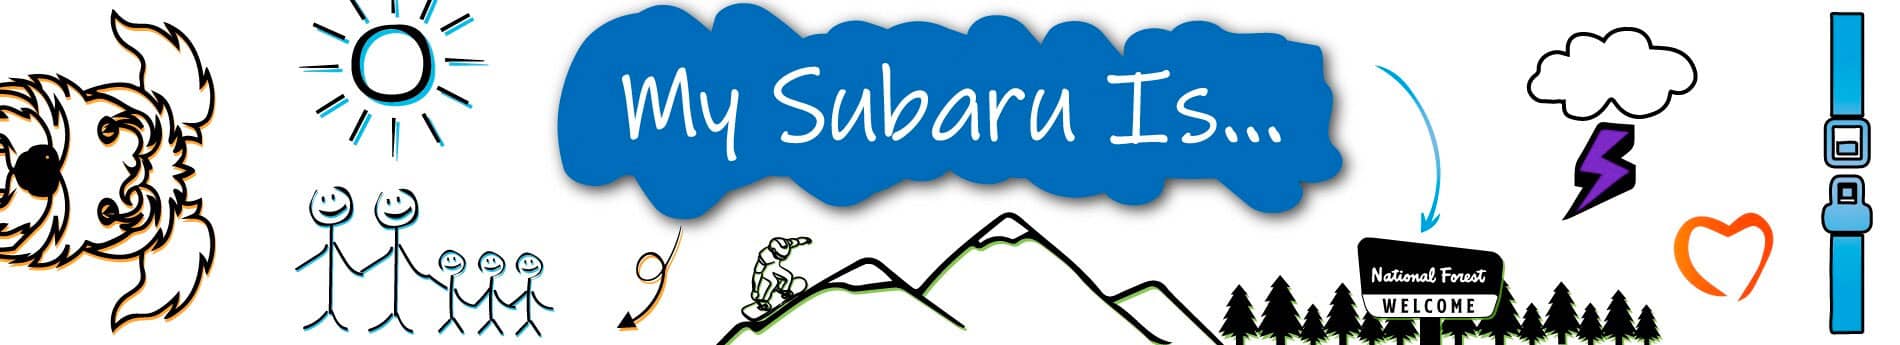 My Subaru Is